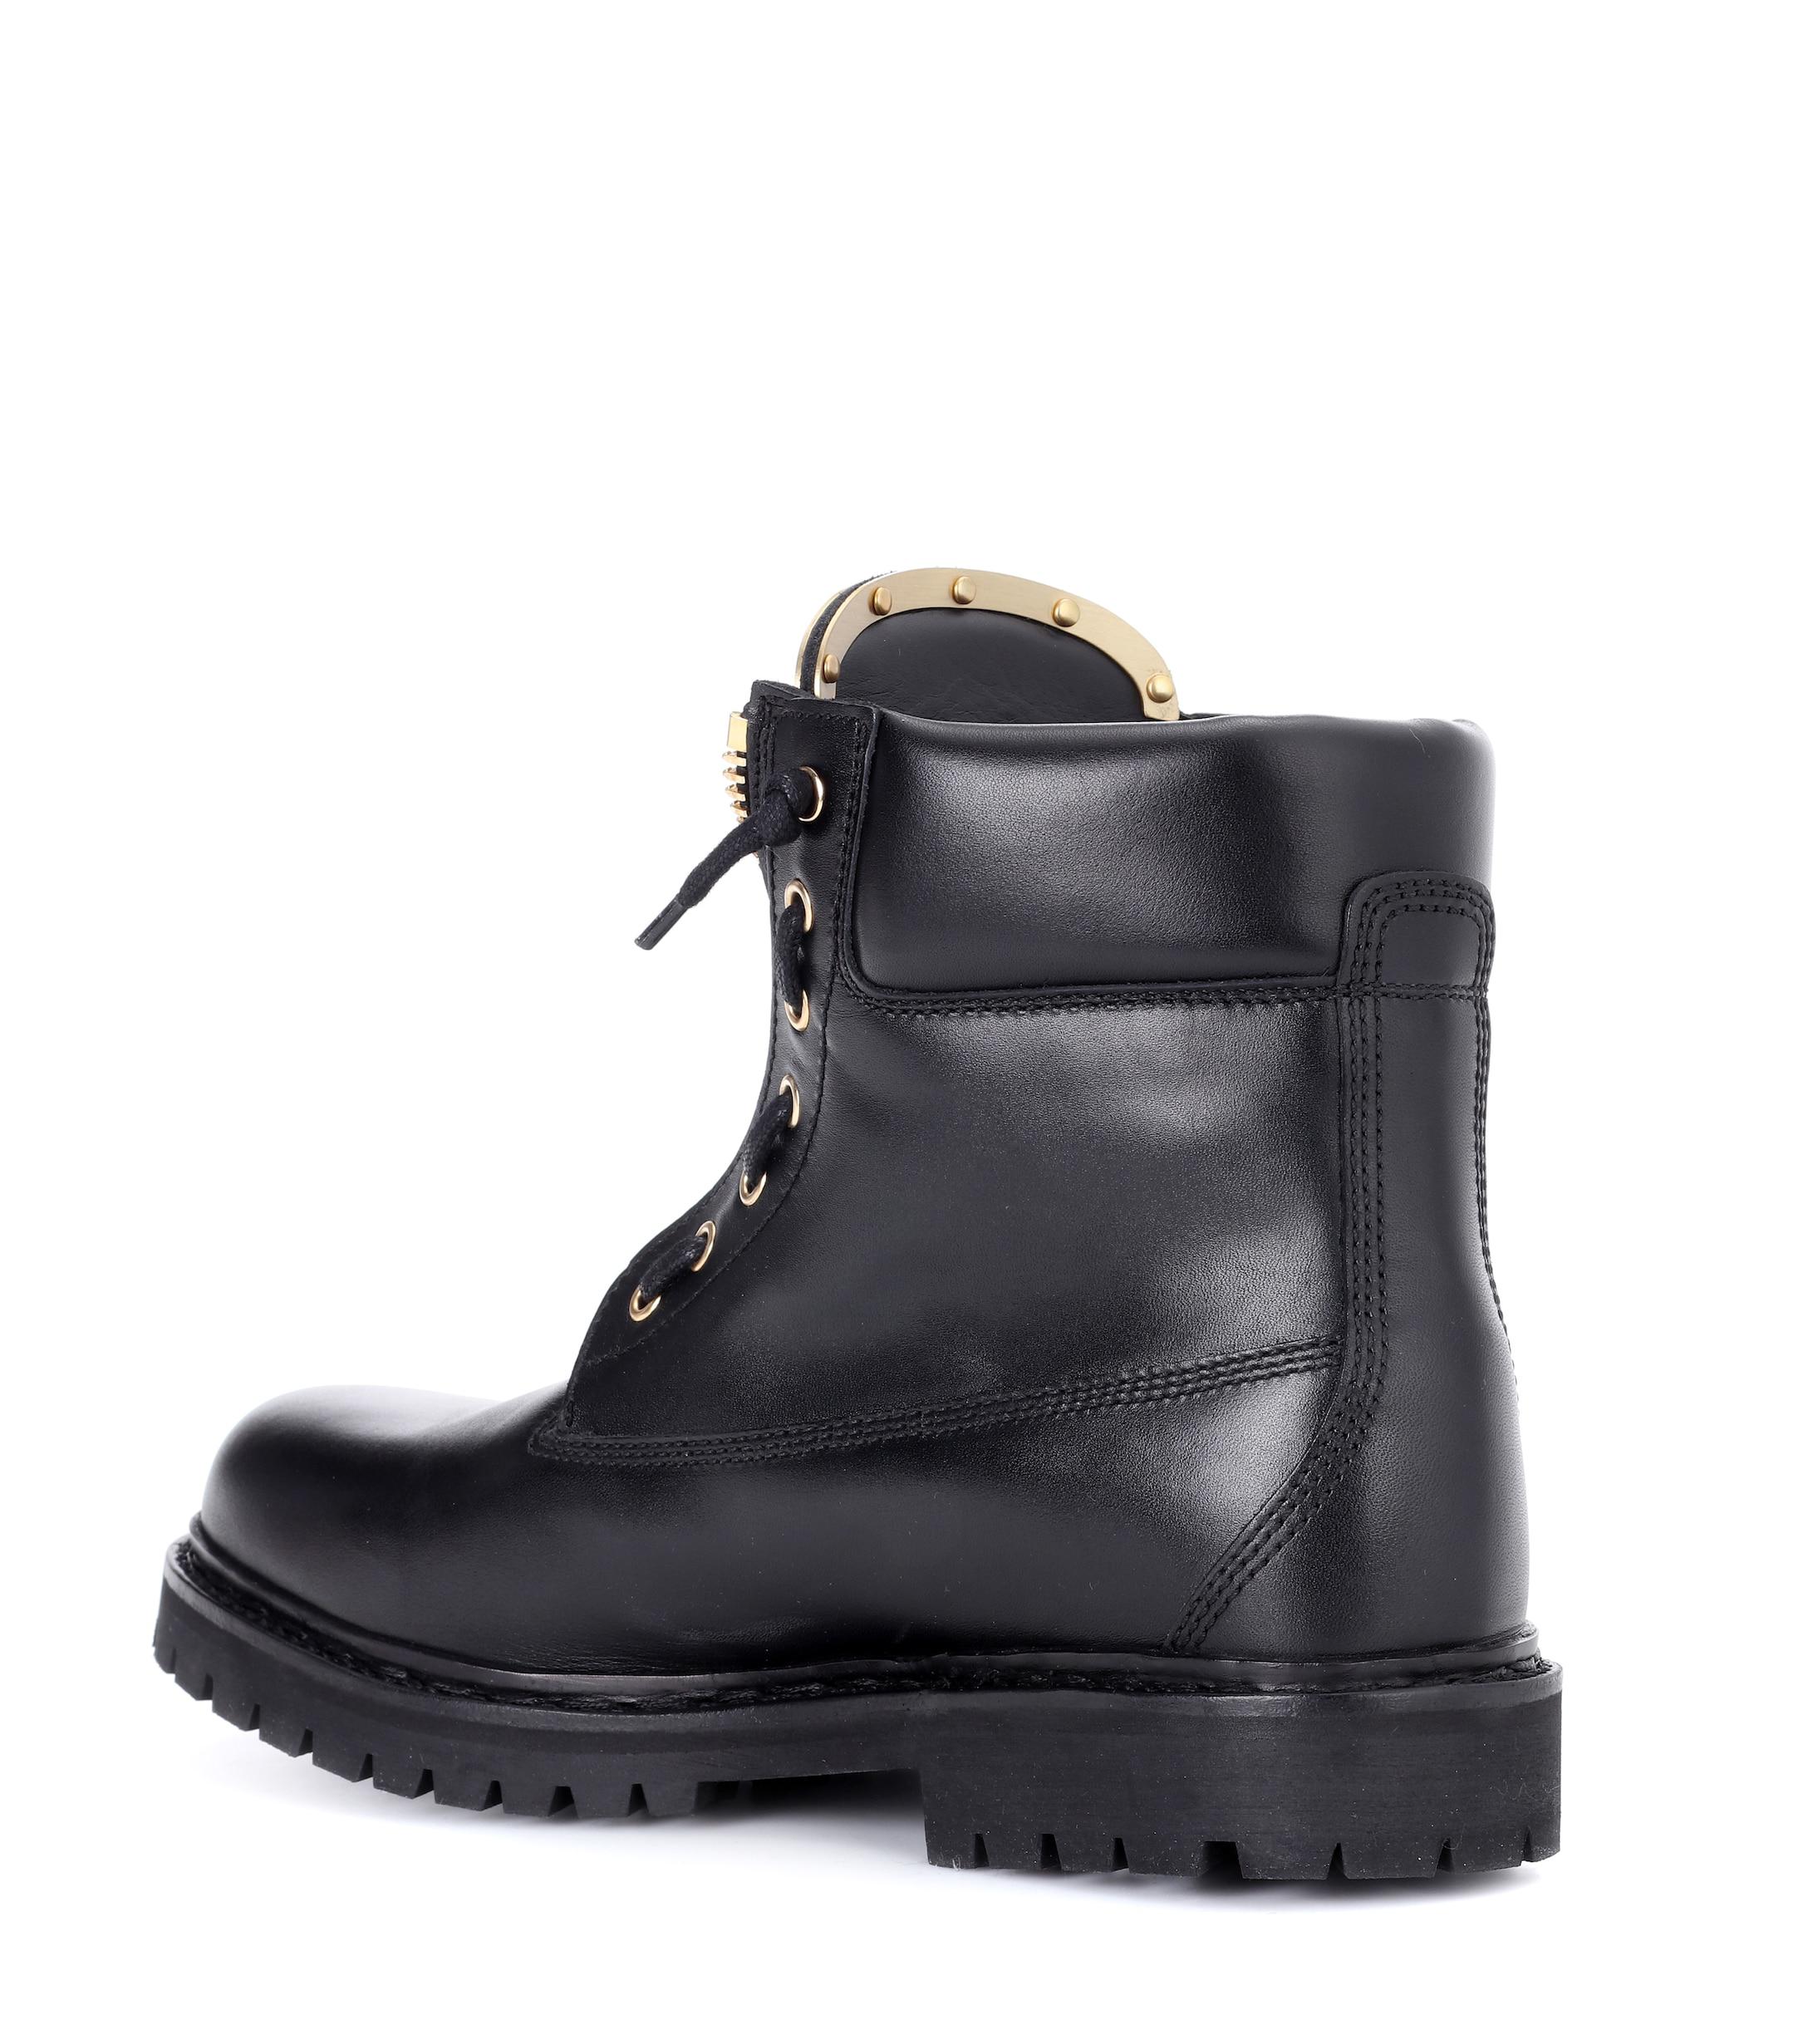 BALMAIN Taiga leather boots (Black/Gold), Women's Fashion, Footwear, Boots  on Carousell